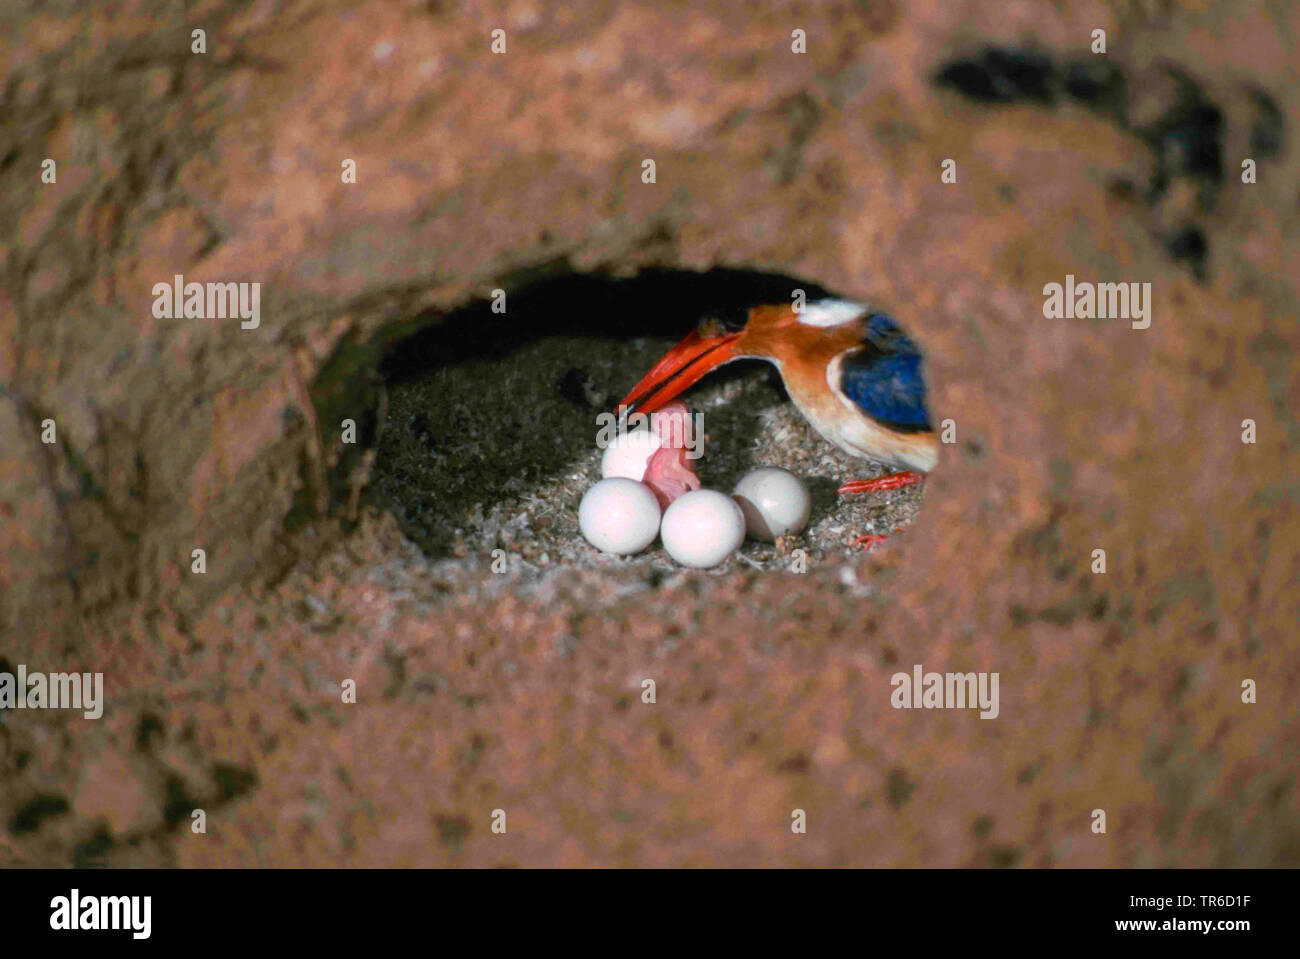 Malachite kingfisher (Alcedo cristata, Corythornis cristatus), adult bird feeding just hatched chick in the breeding burrow, Namibia Stock Photo